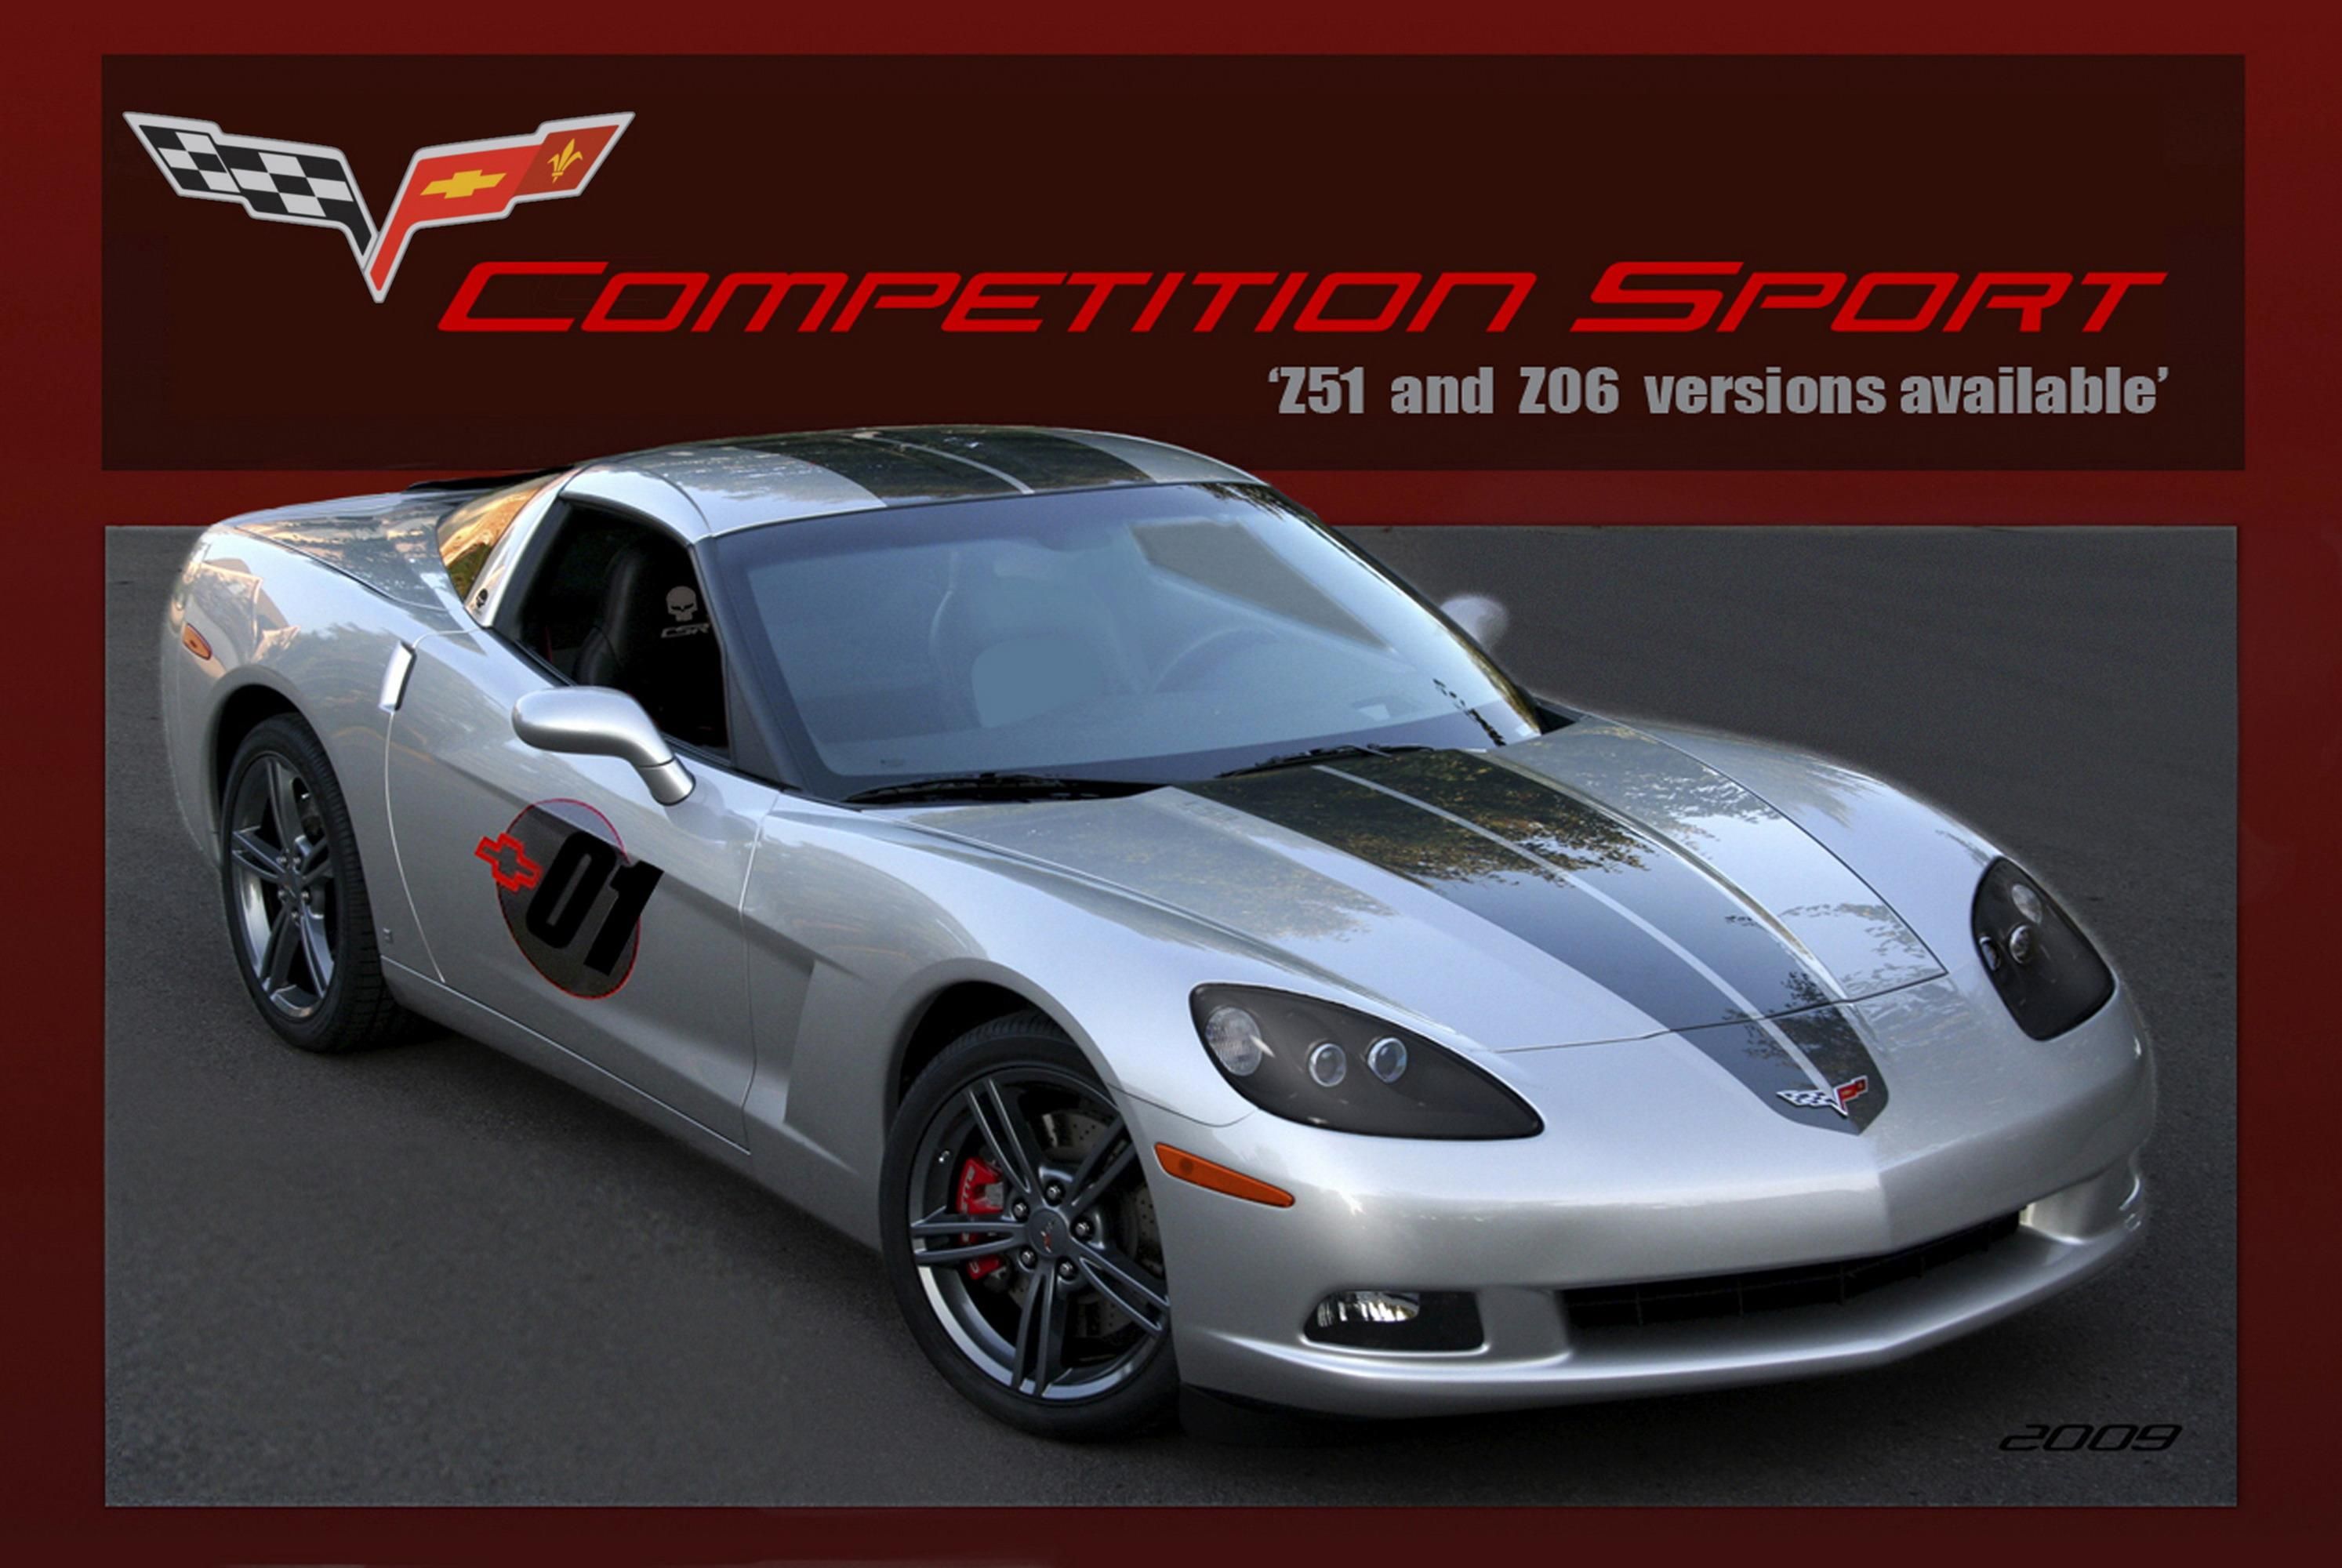 2009 Chevrolet Corvette Competition Sport Package 